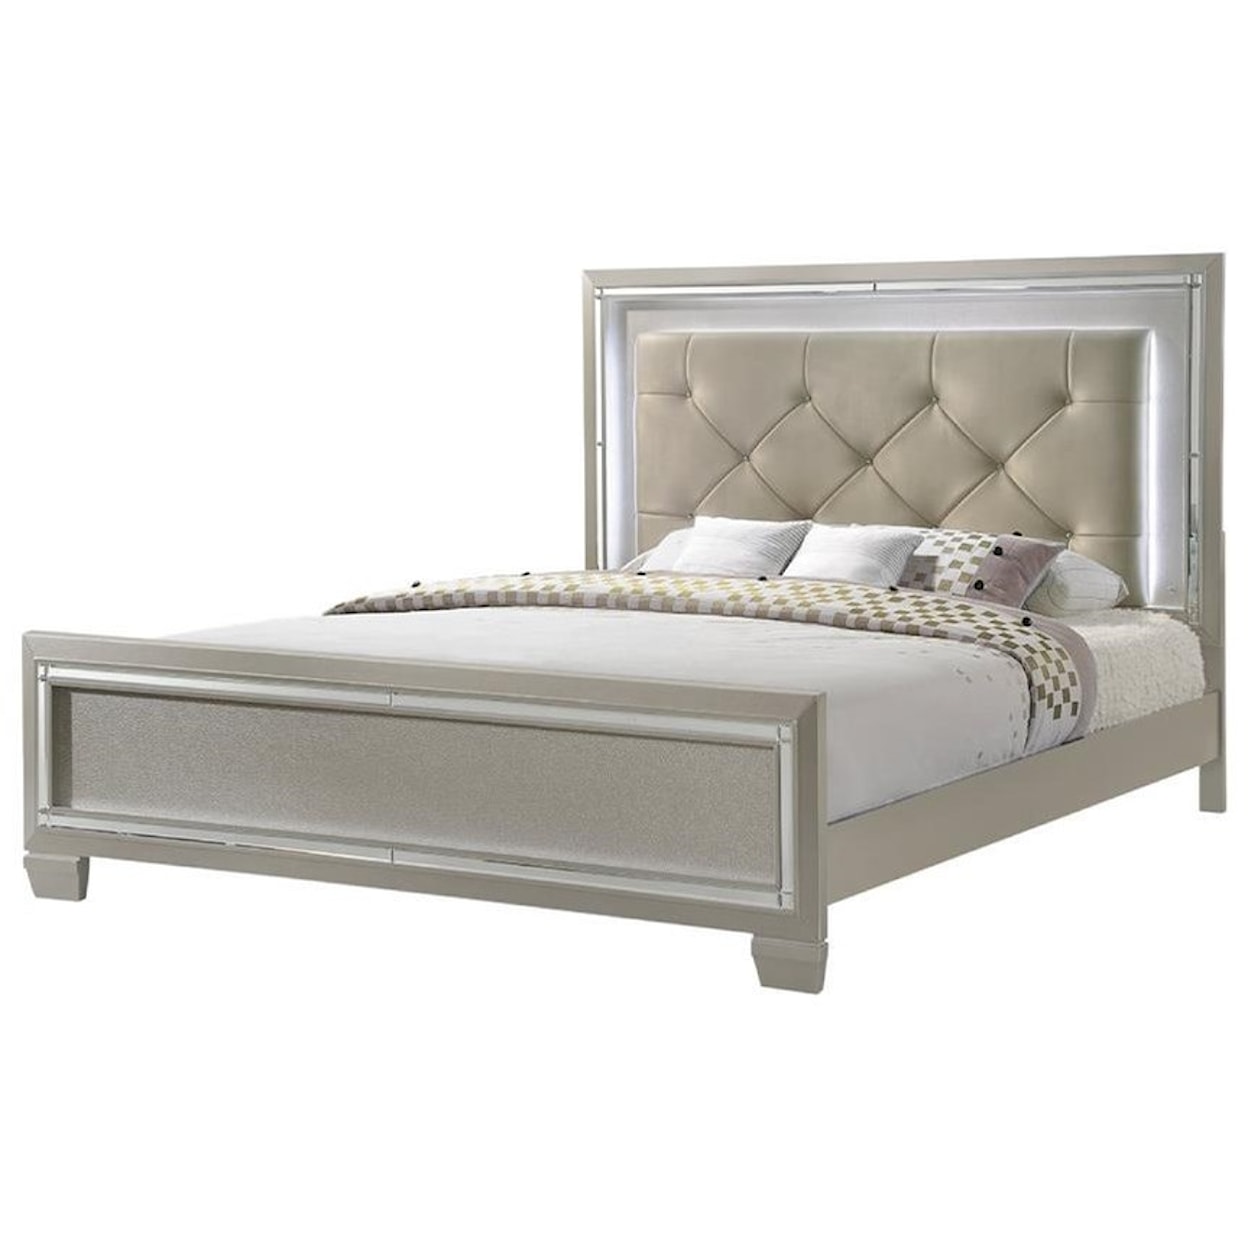 Elements International Platinum Queen Upholstered Bed